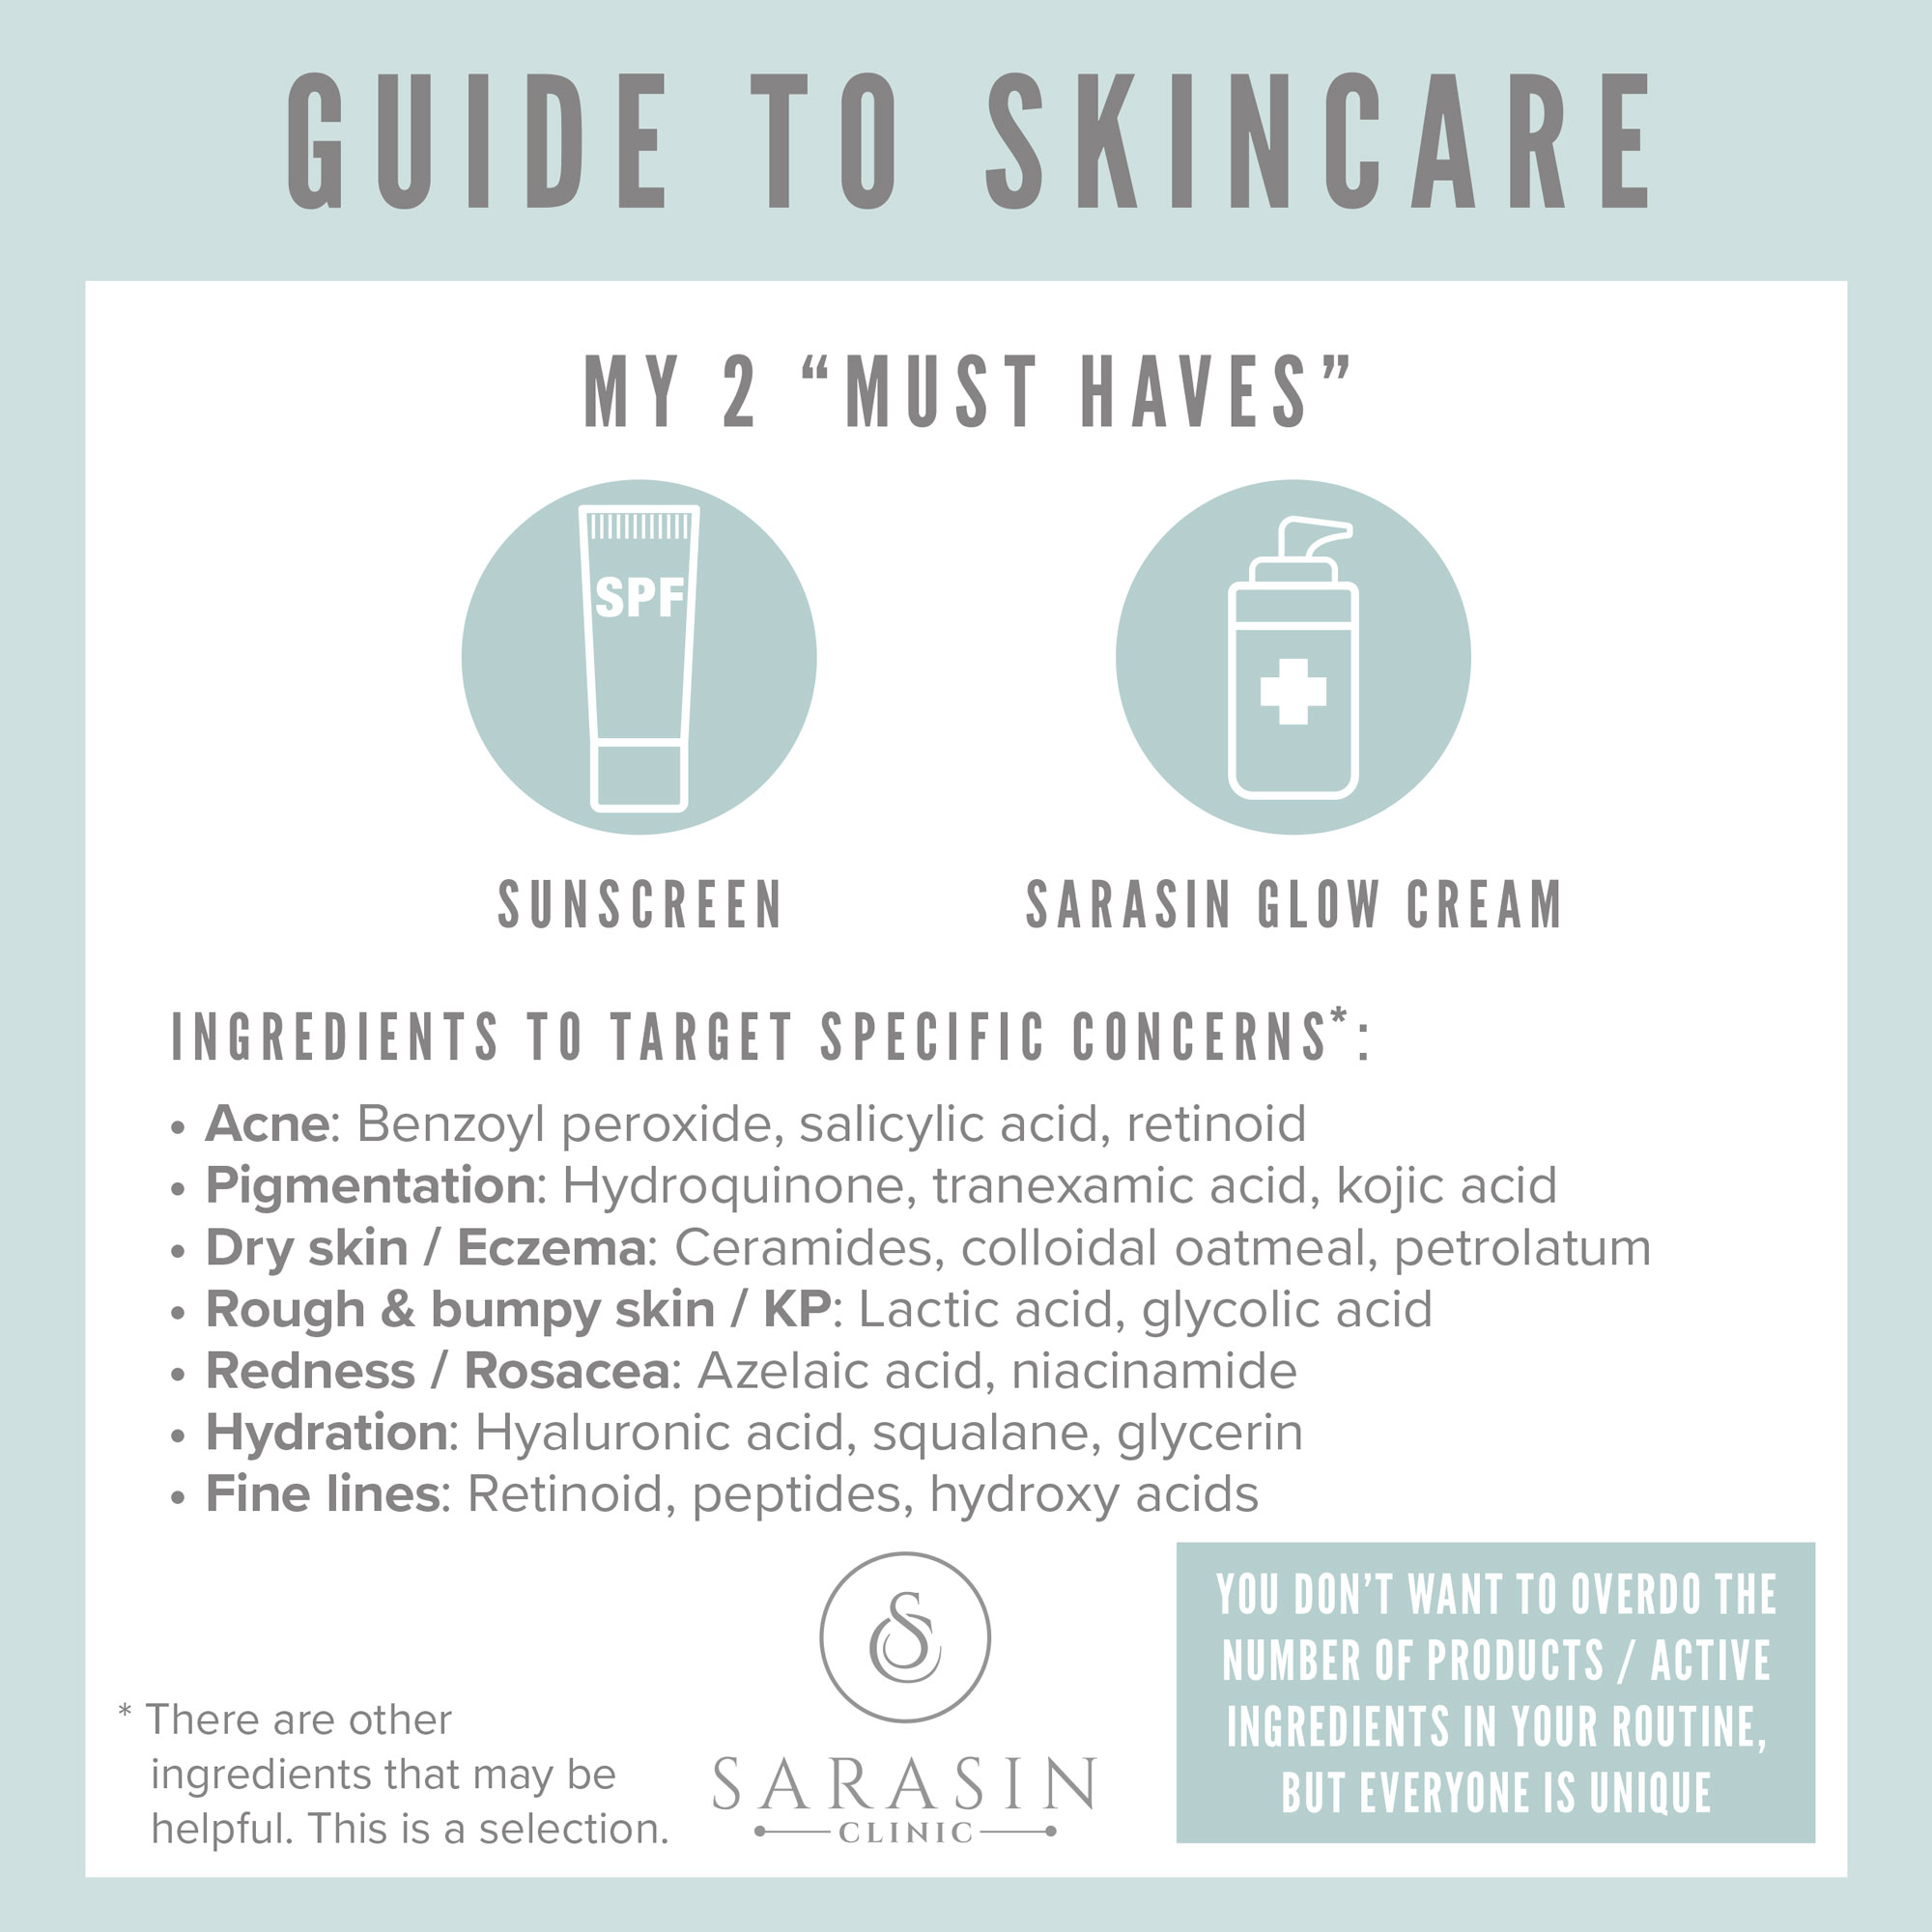 Sarasin Clinic guide to skincare